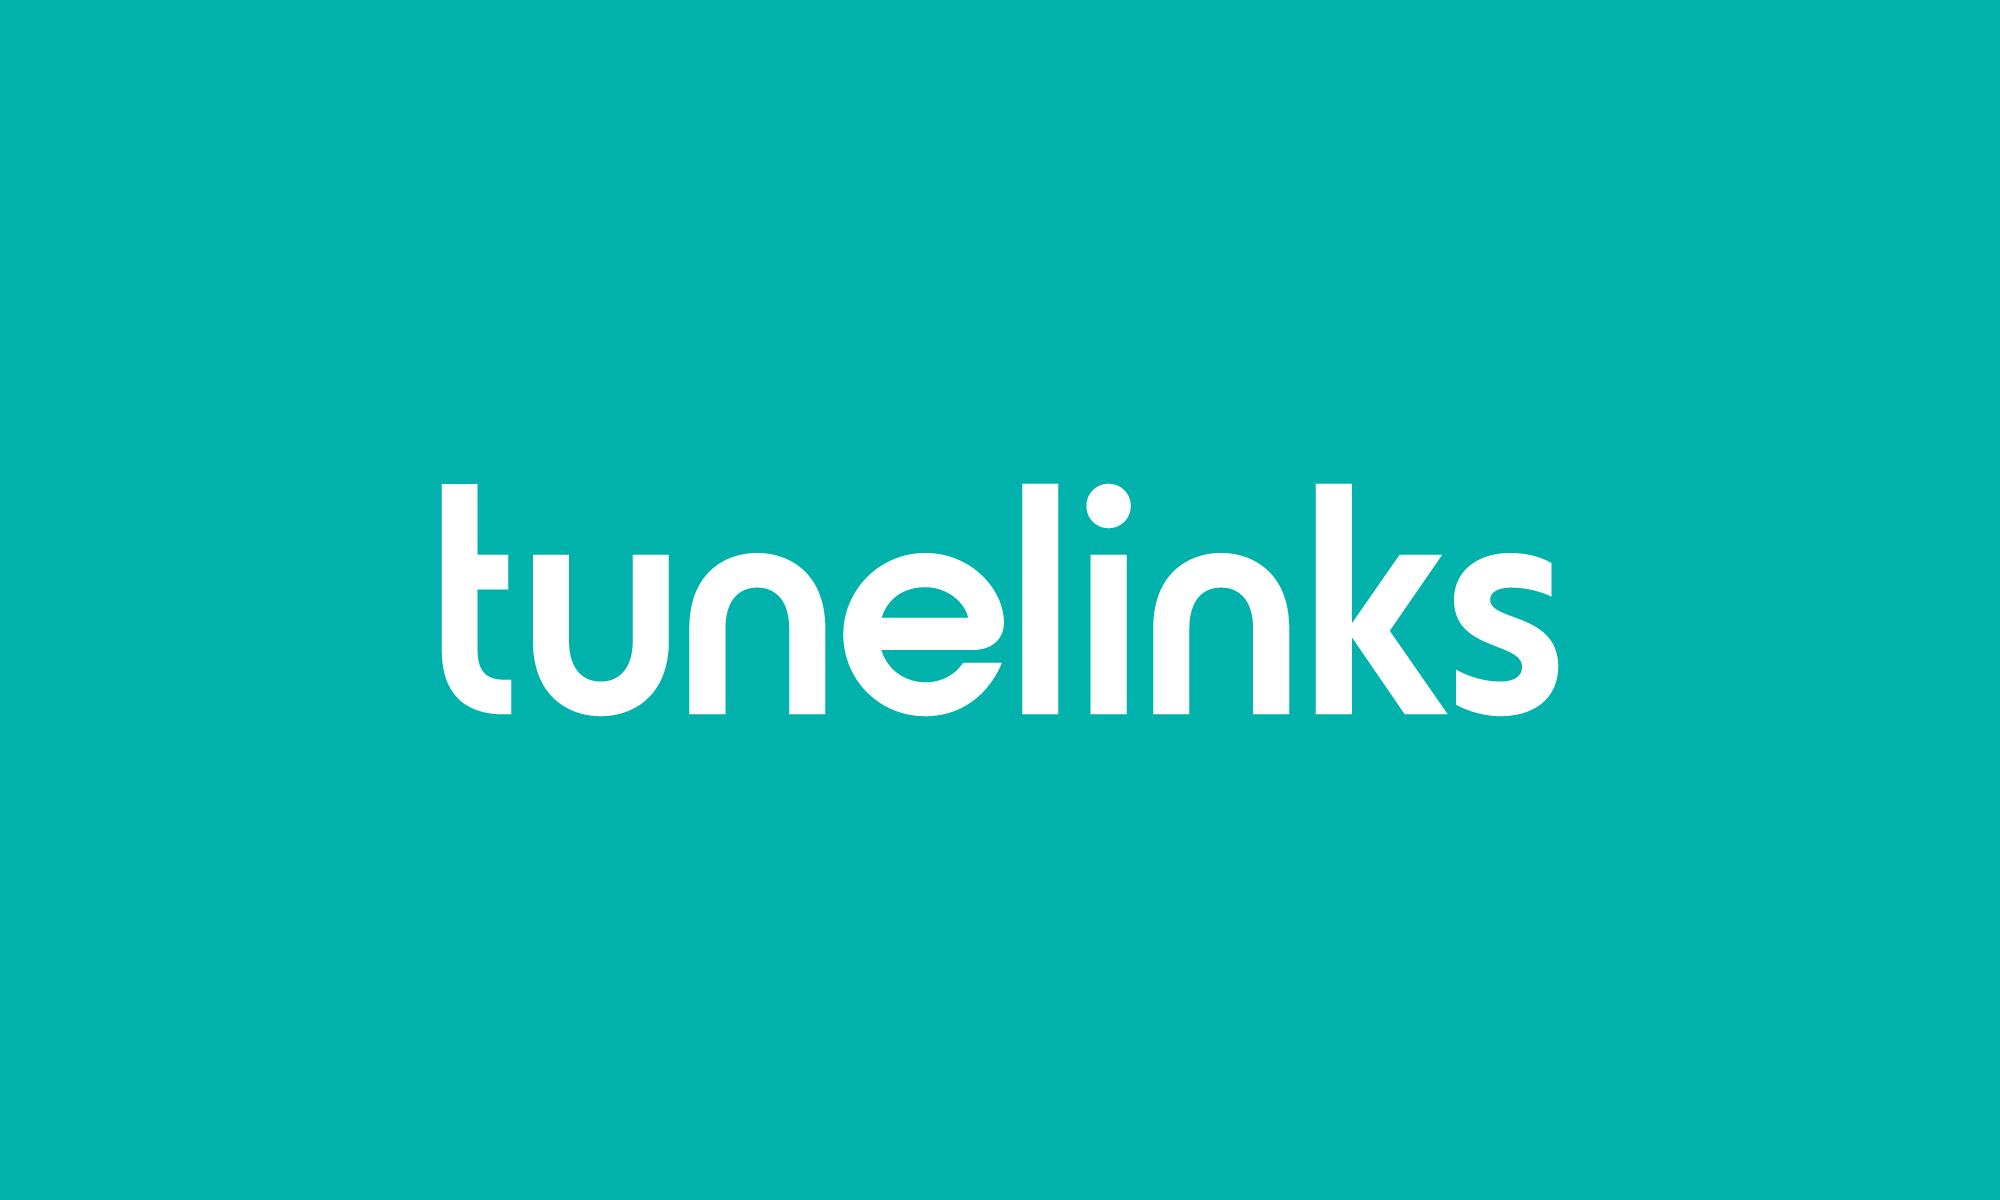 tunelinks wordmark